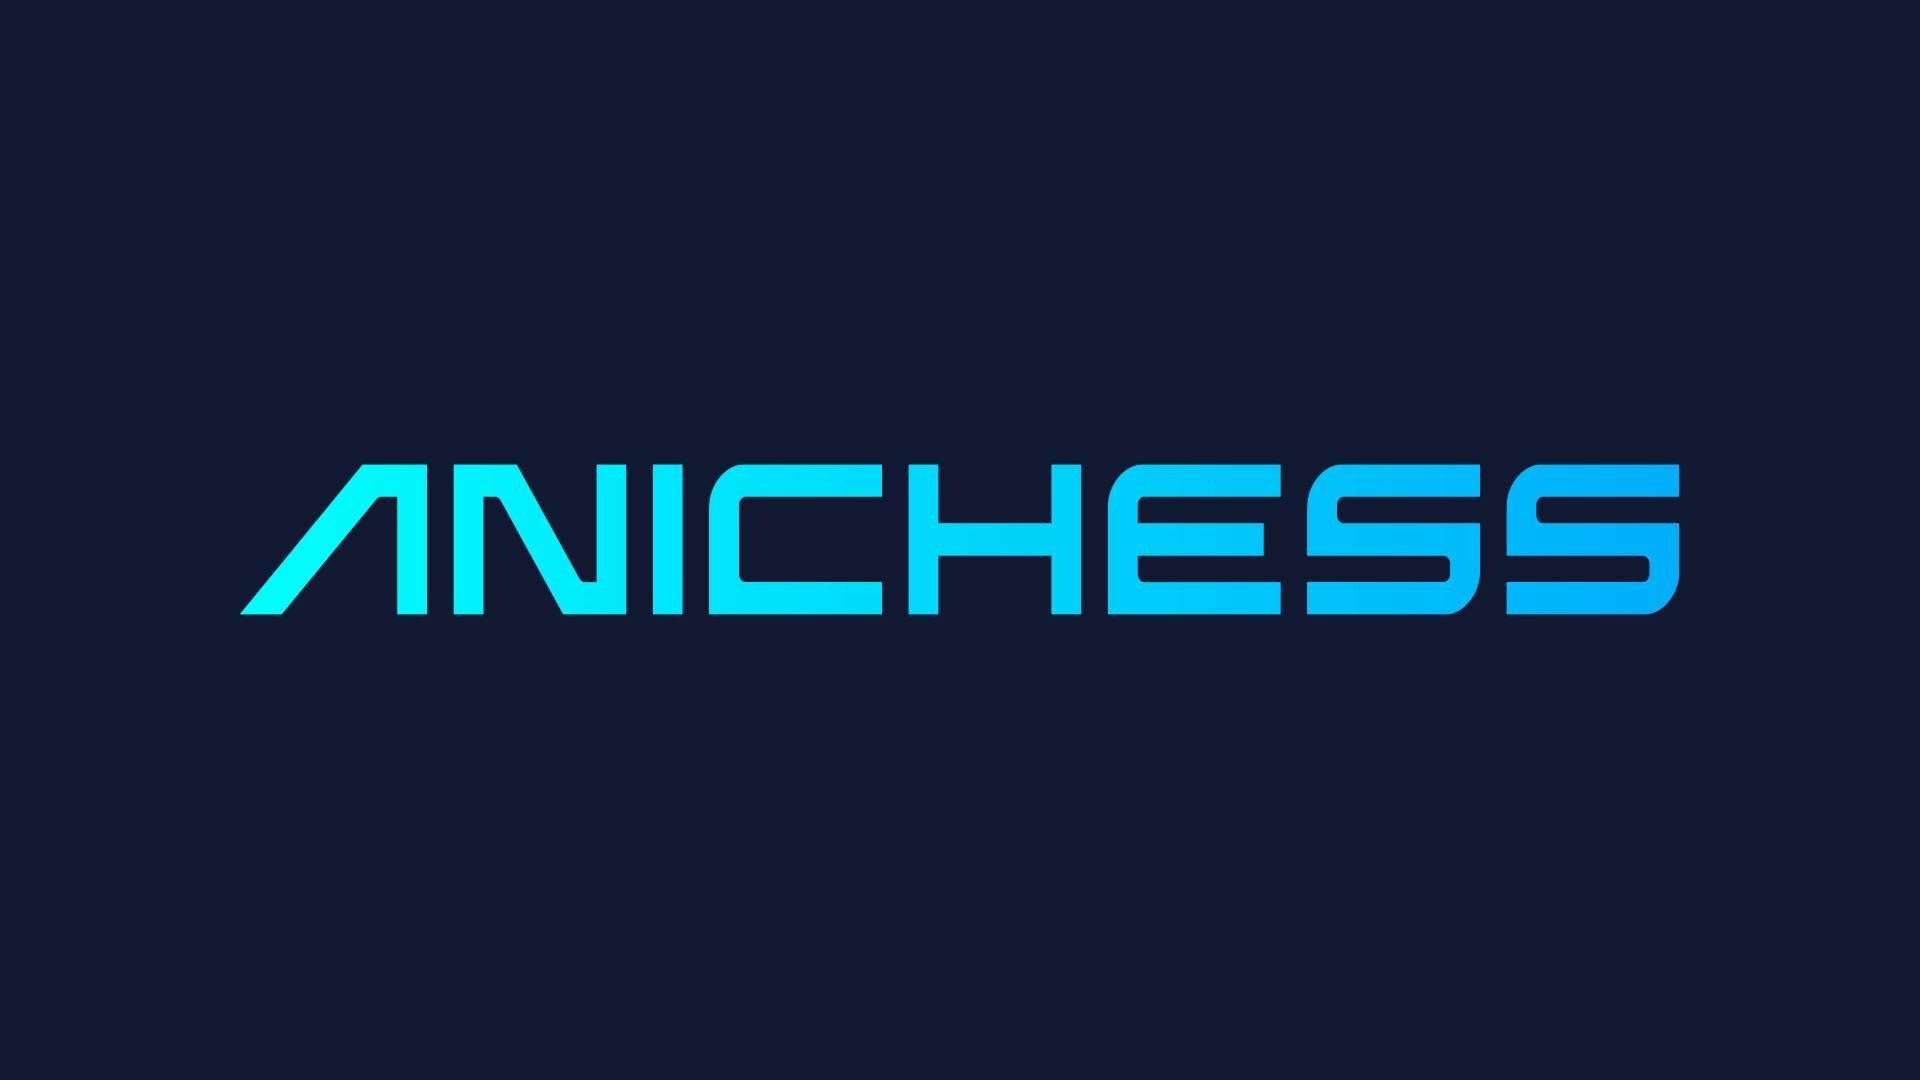 Anichess: Web3-Powered Chess Evolution